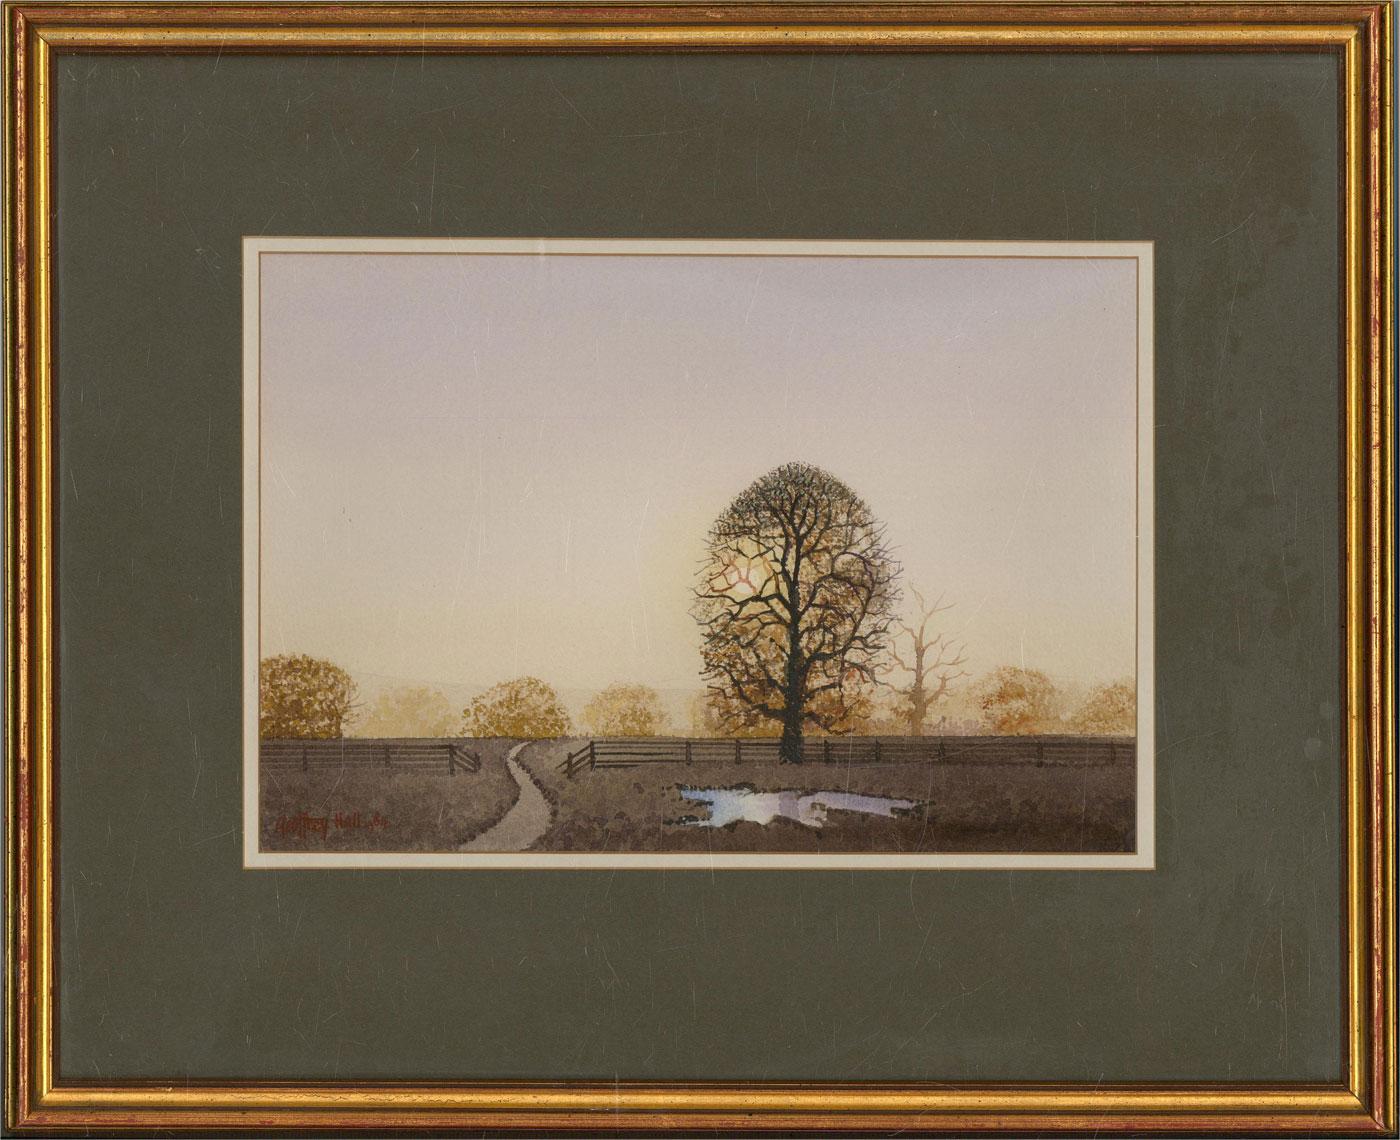 Unknown Landscape Art - Geoffrey John Hall (b.1946) - 1984 Watercolour, Winter Country Lane